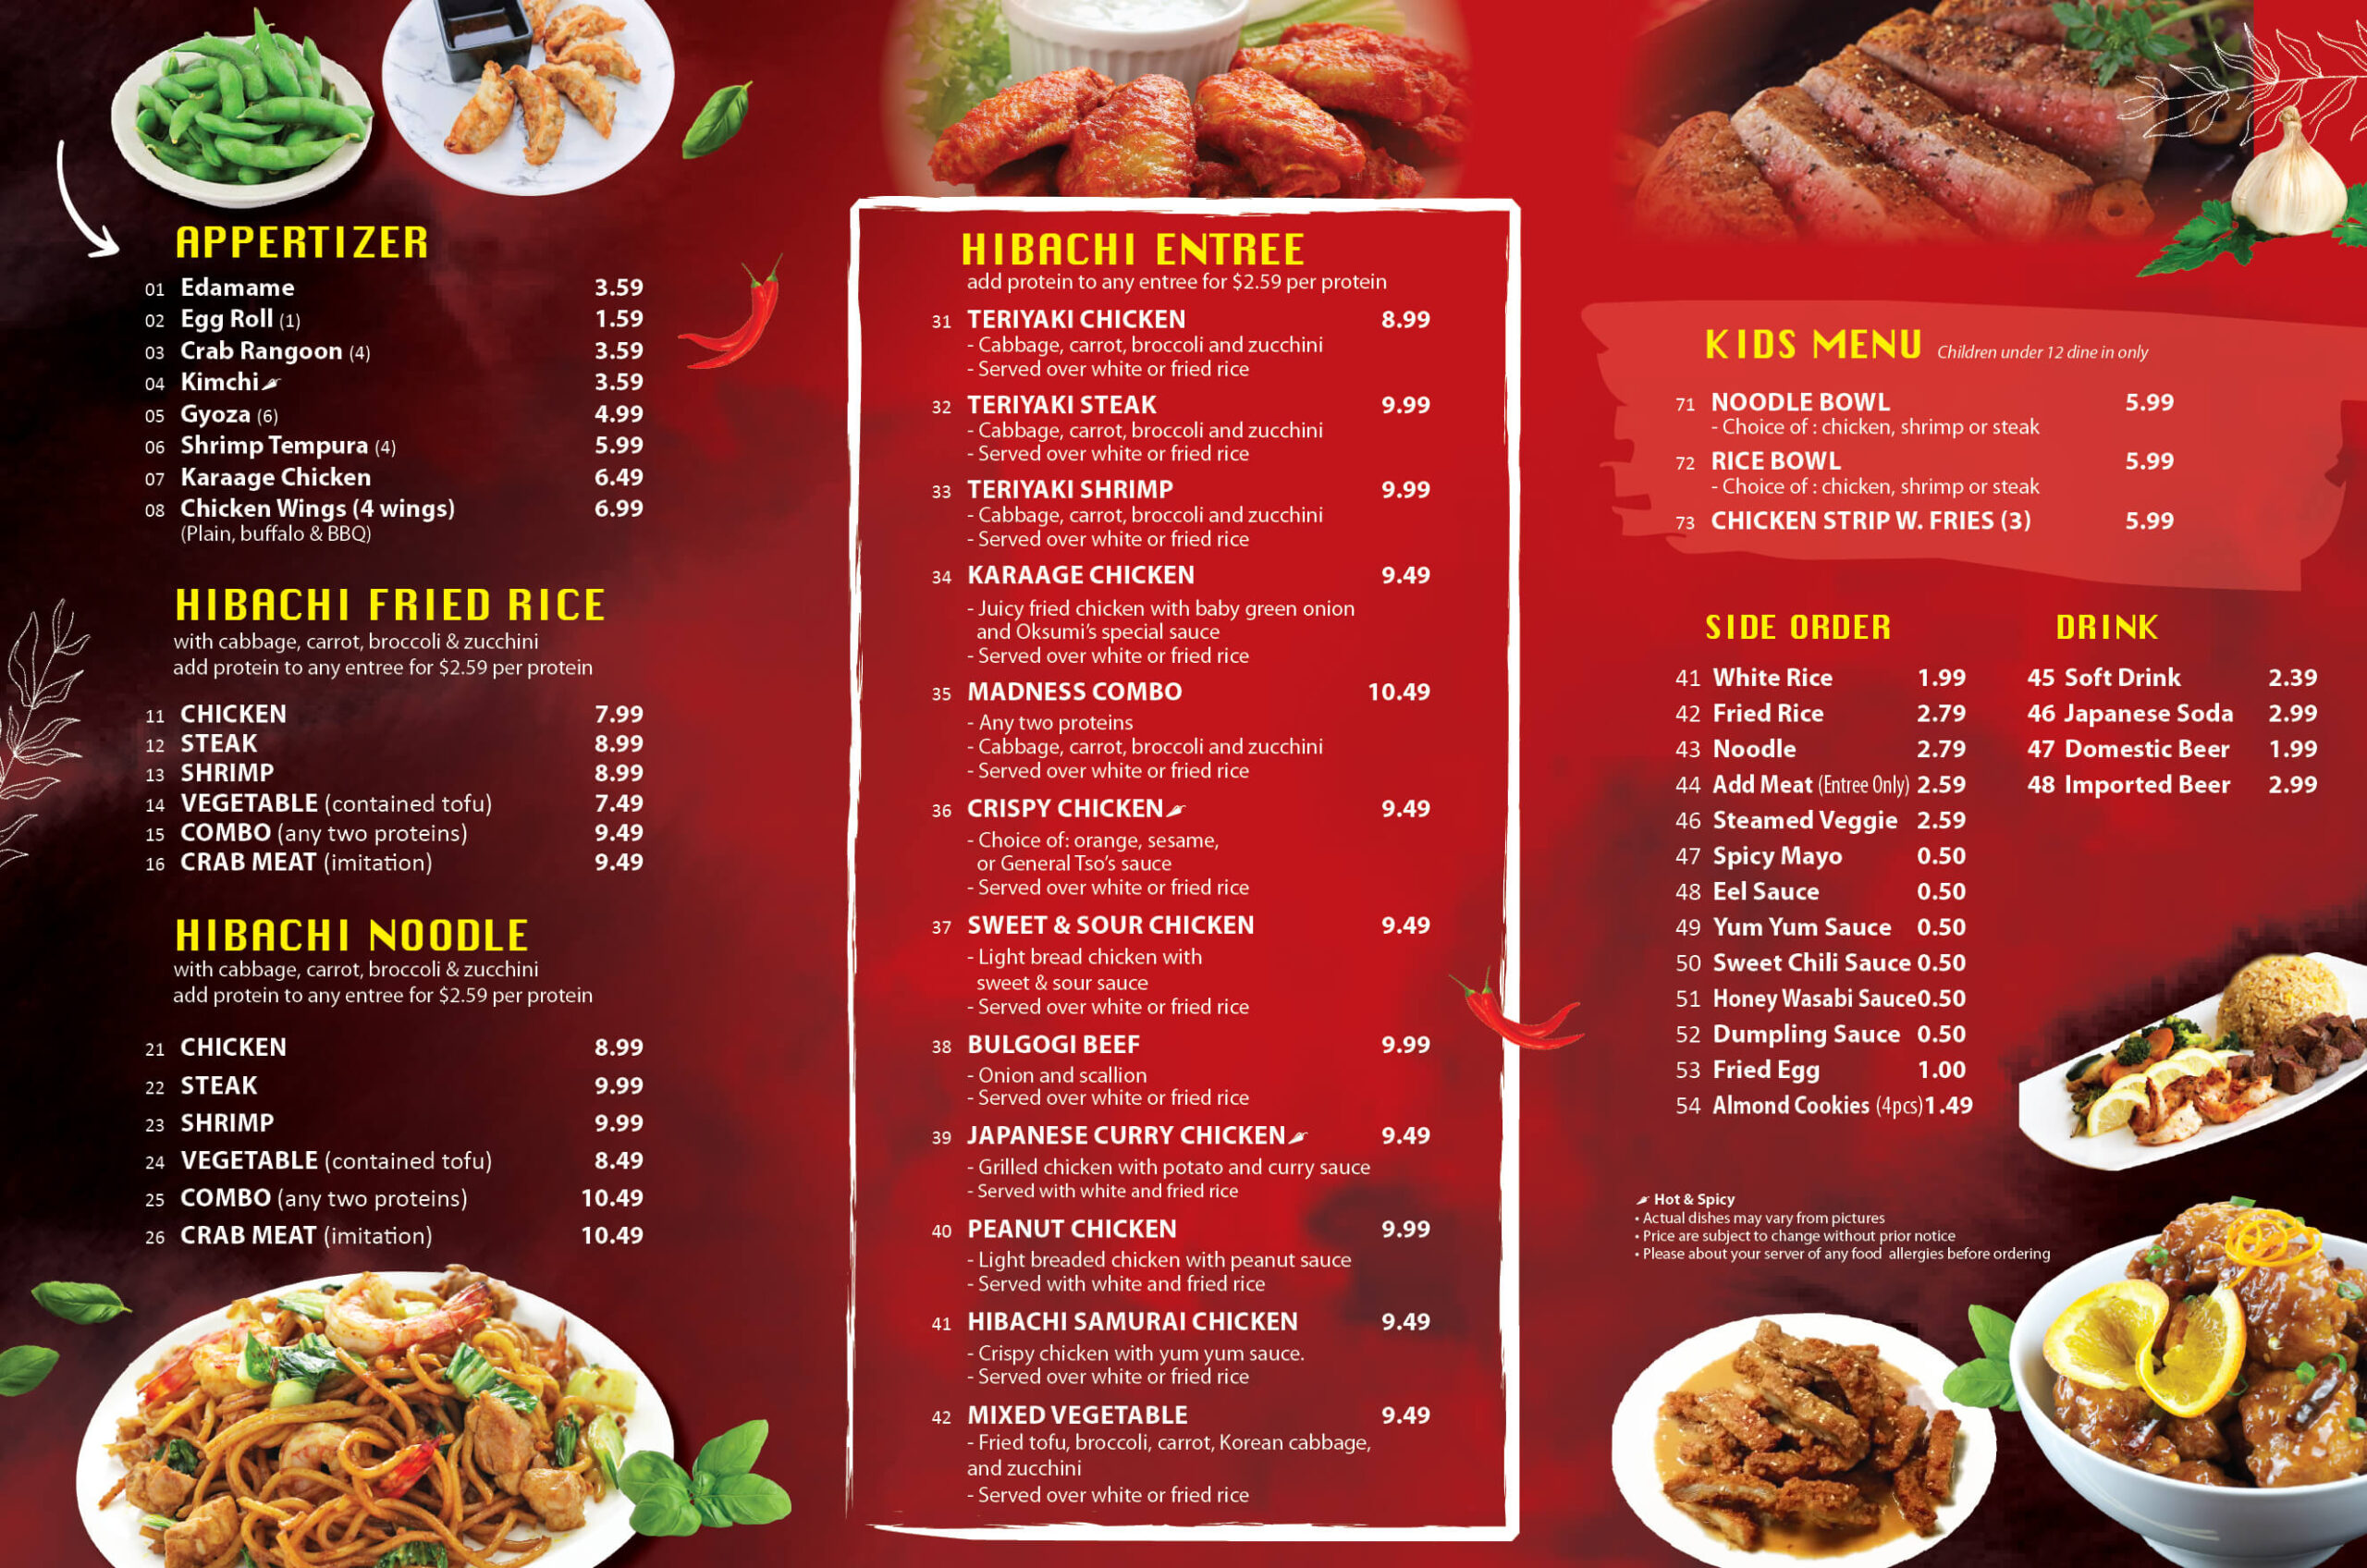 hibachi madness restaurant new menu 2023